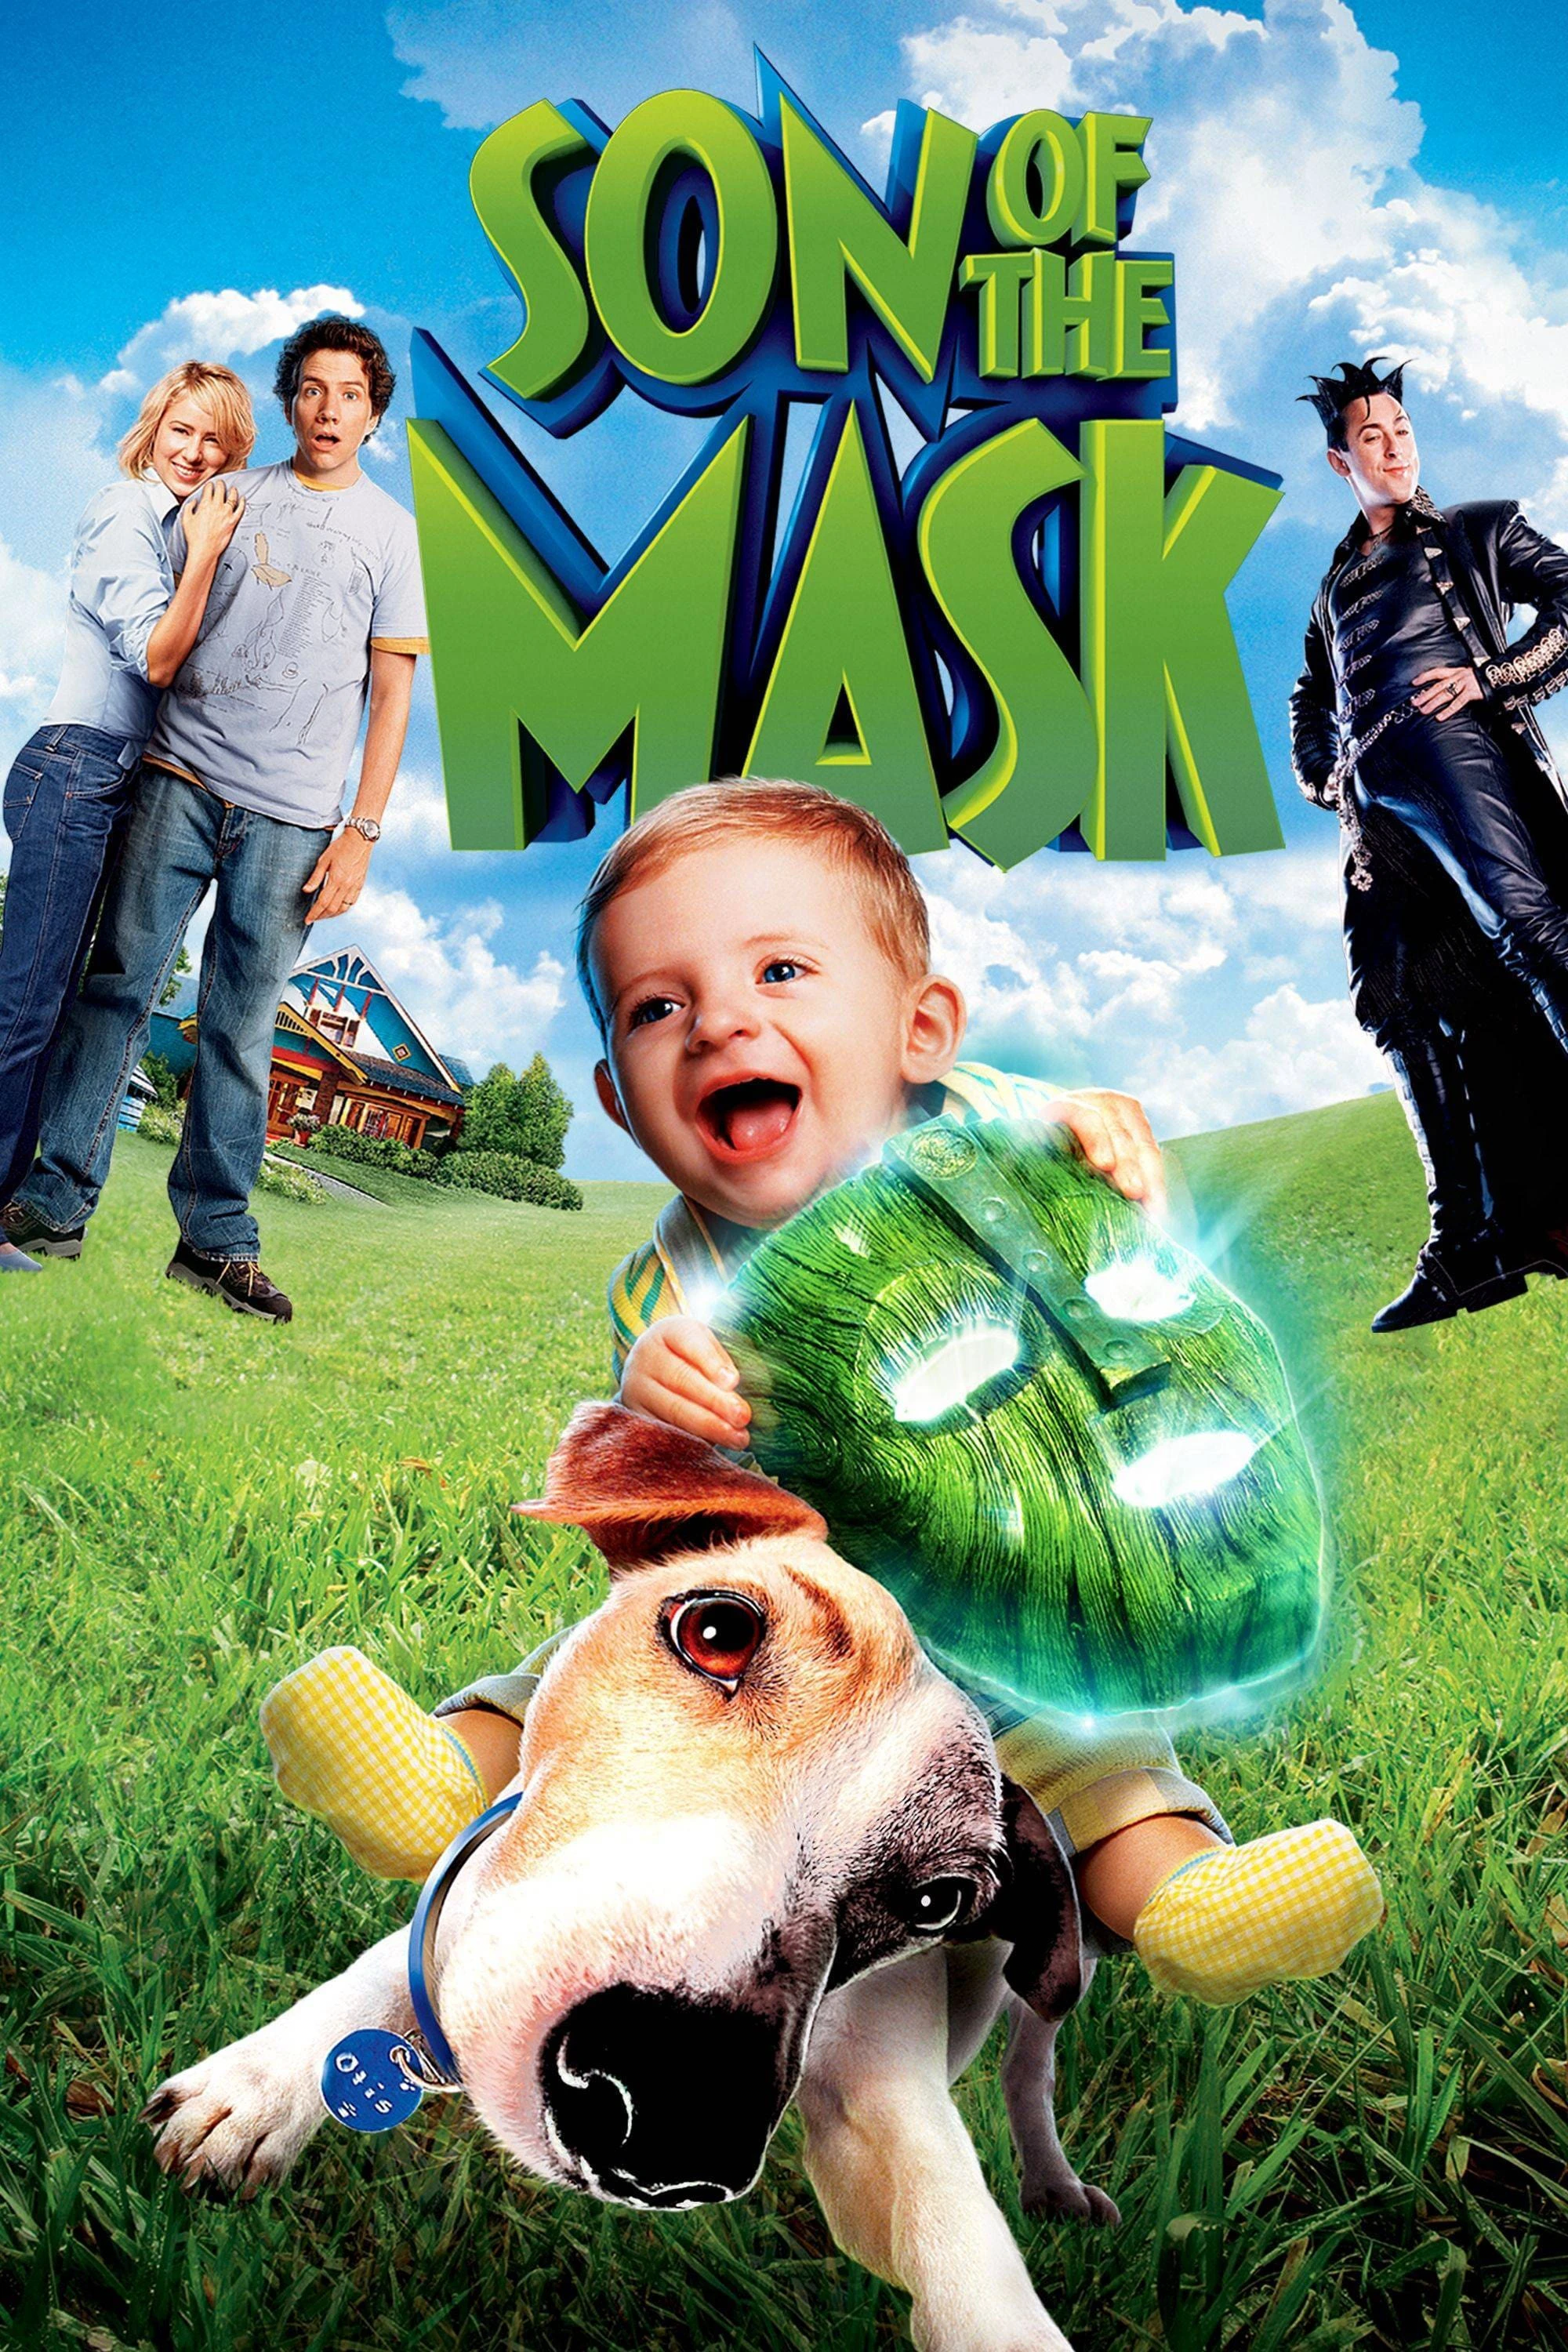 Đứa Con Của Mặt Nạ | Son of the Mask (2005)